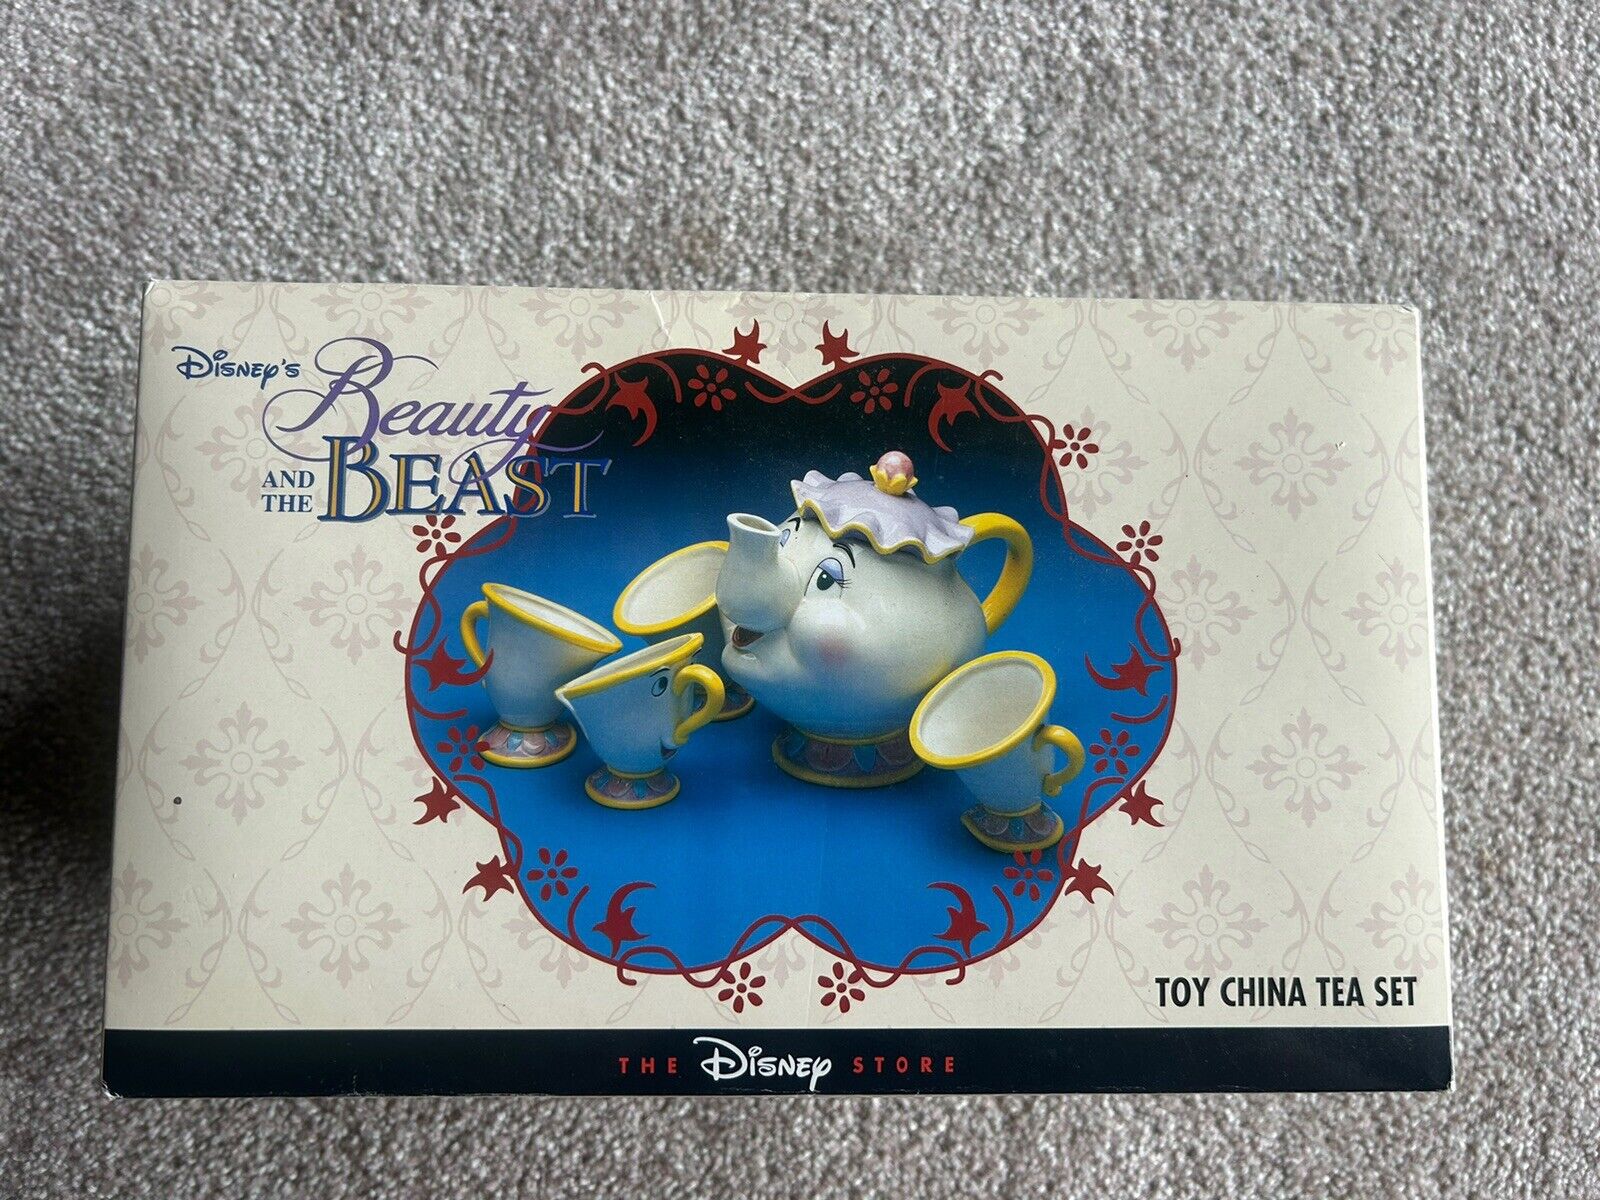 Vintage Disney Beauty and the Beast Toy China Tea Set